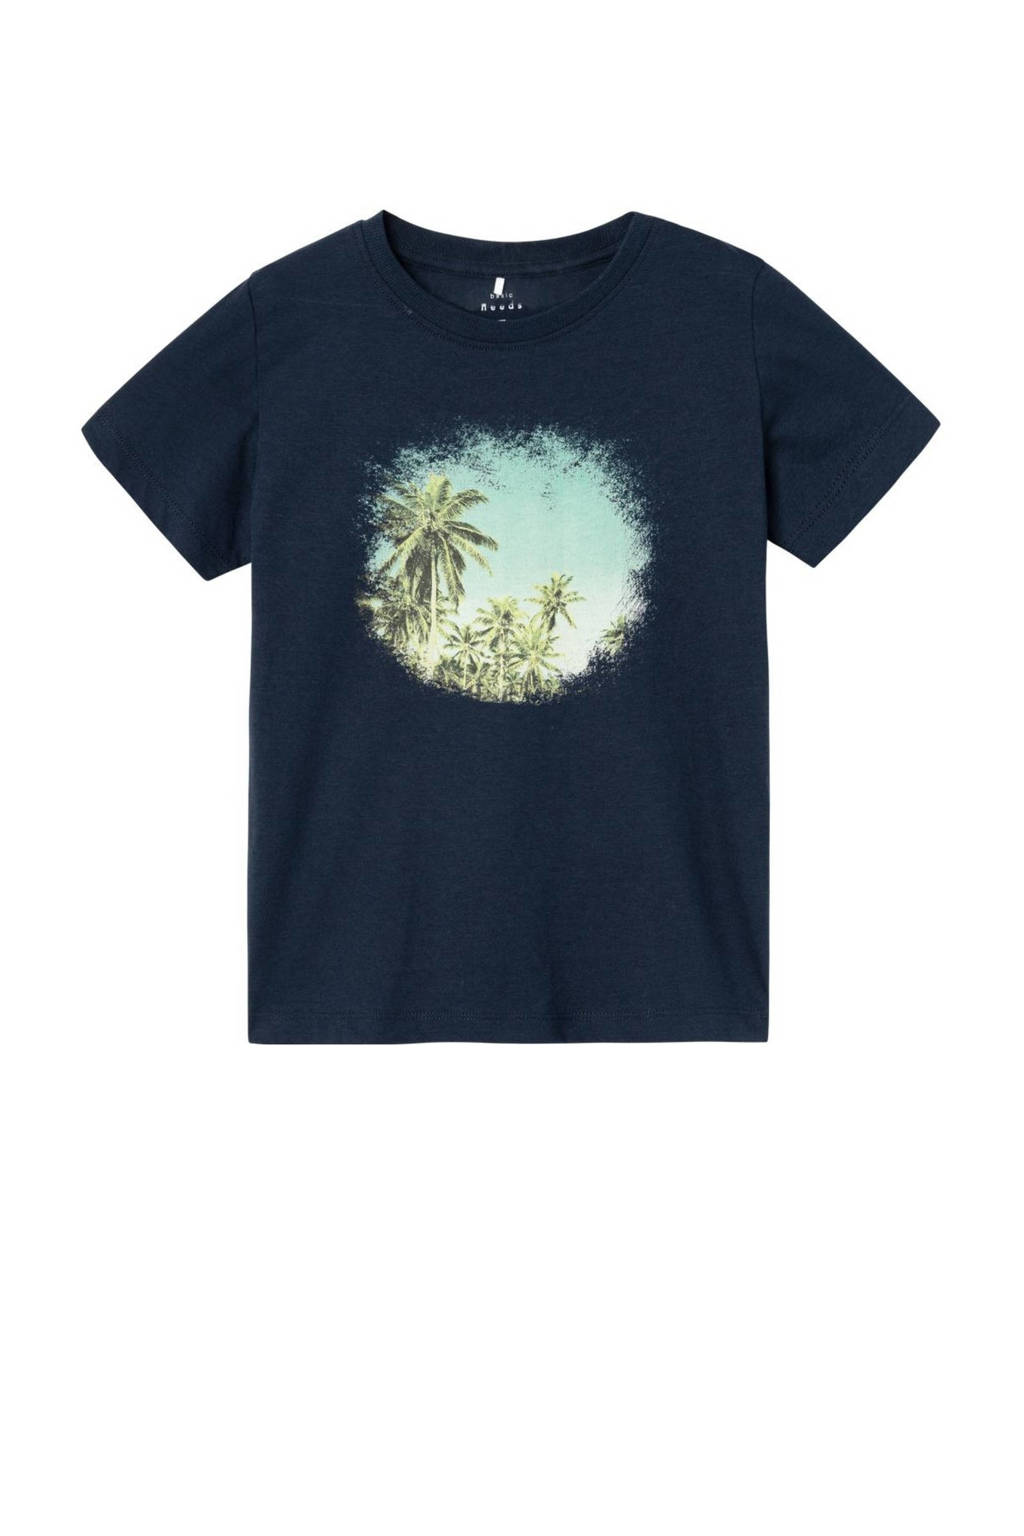 T-shirt NKMVOTO met printopdruk donkerblauw palms